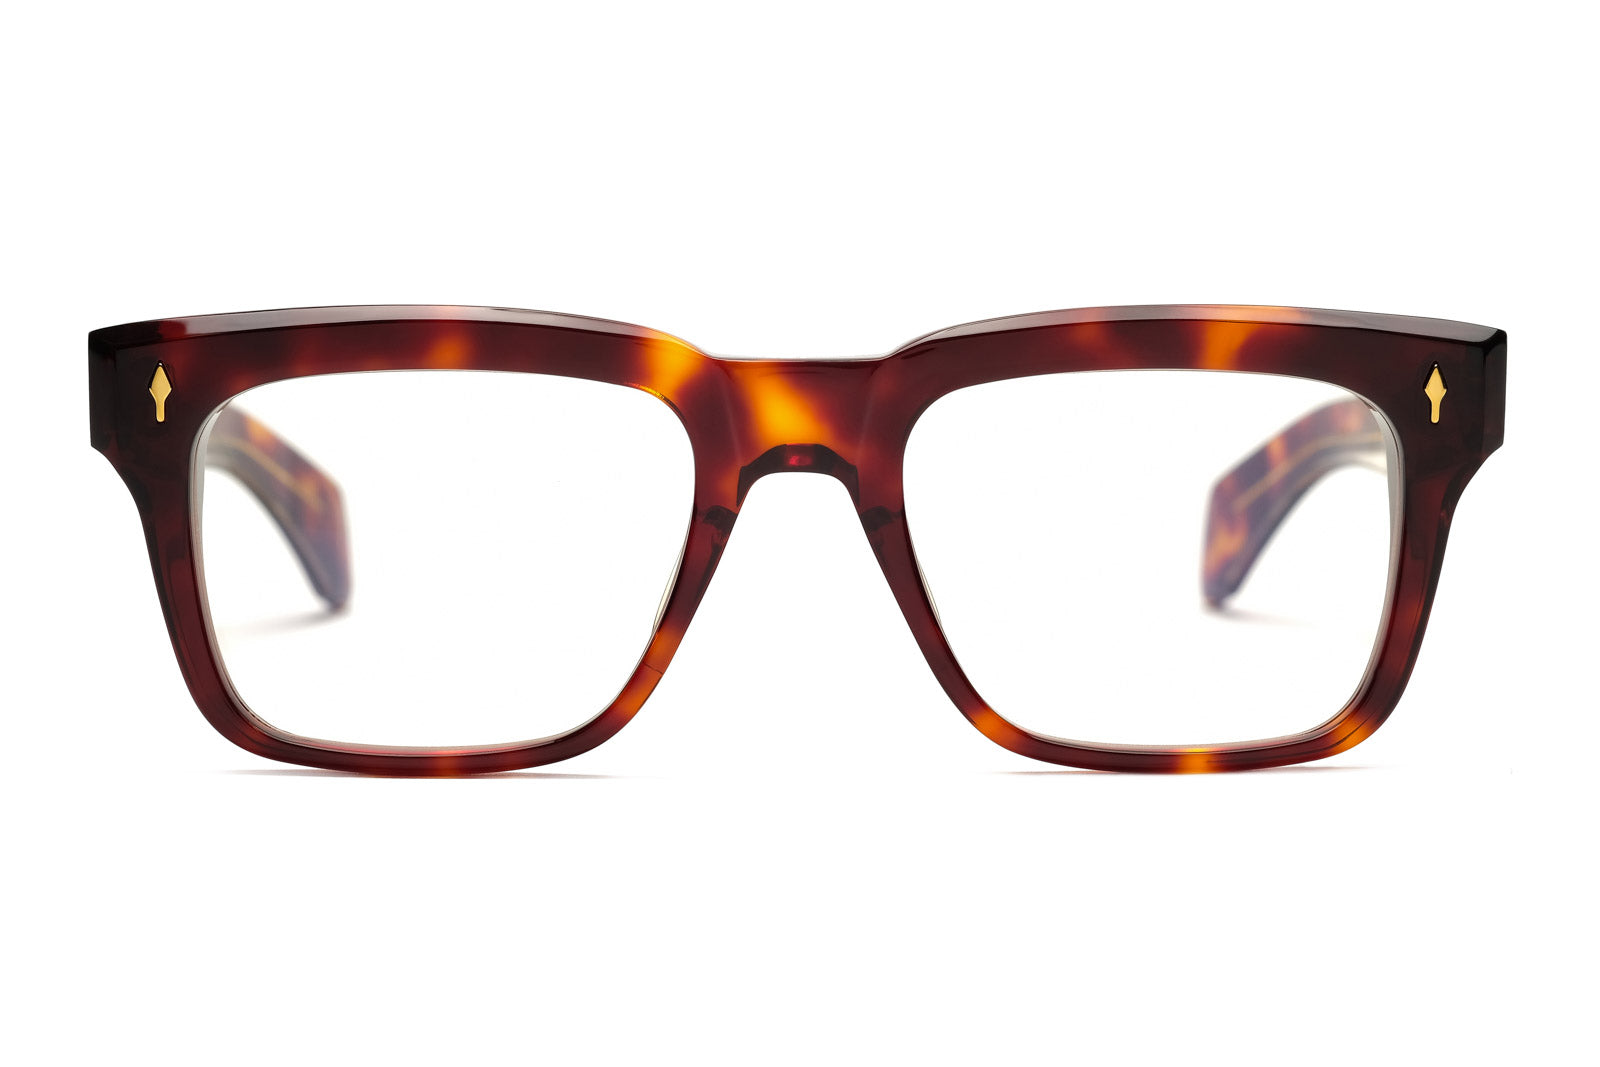 Jacques Marie Mage | Torino Eyeglasses - twelvesixtynine